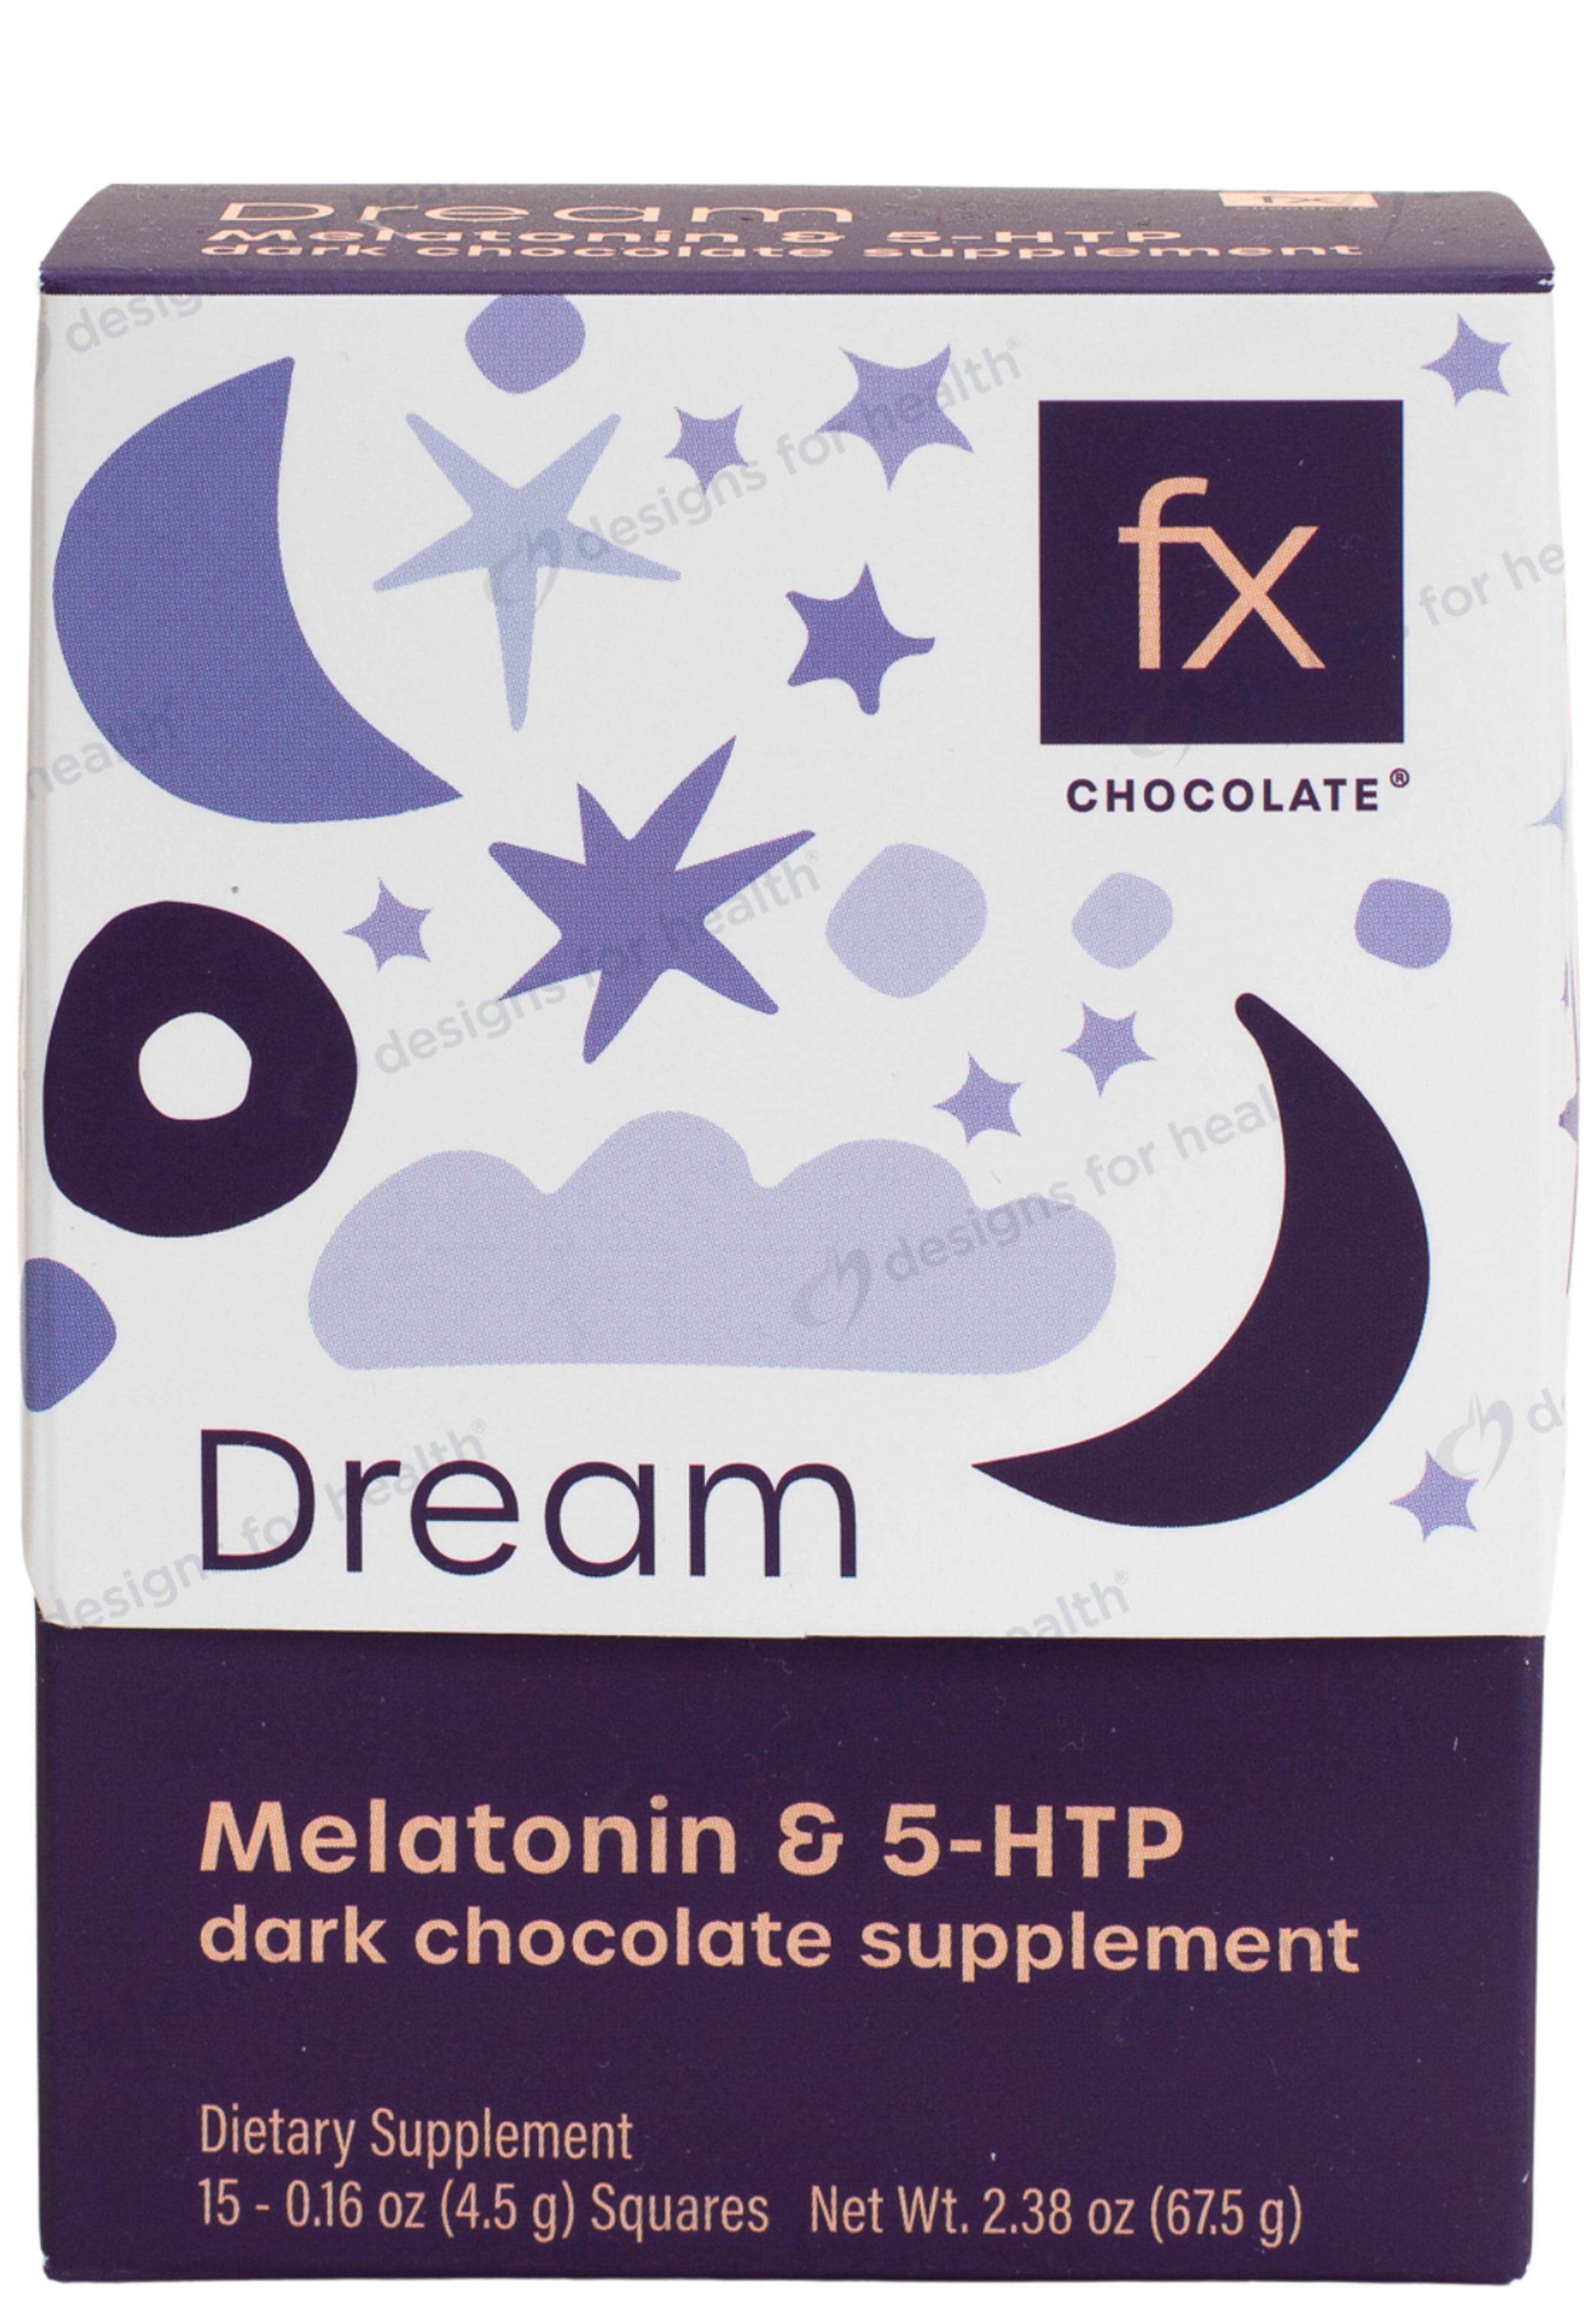 Designs for Health Fx Chocolate Dream